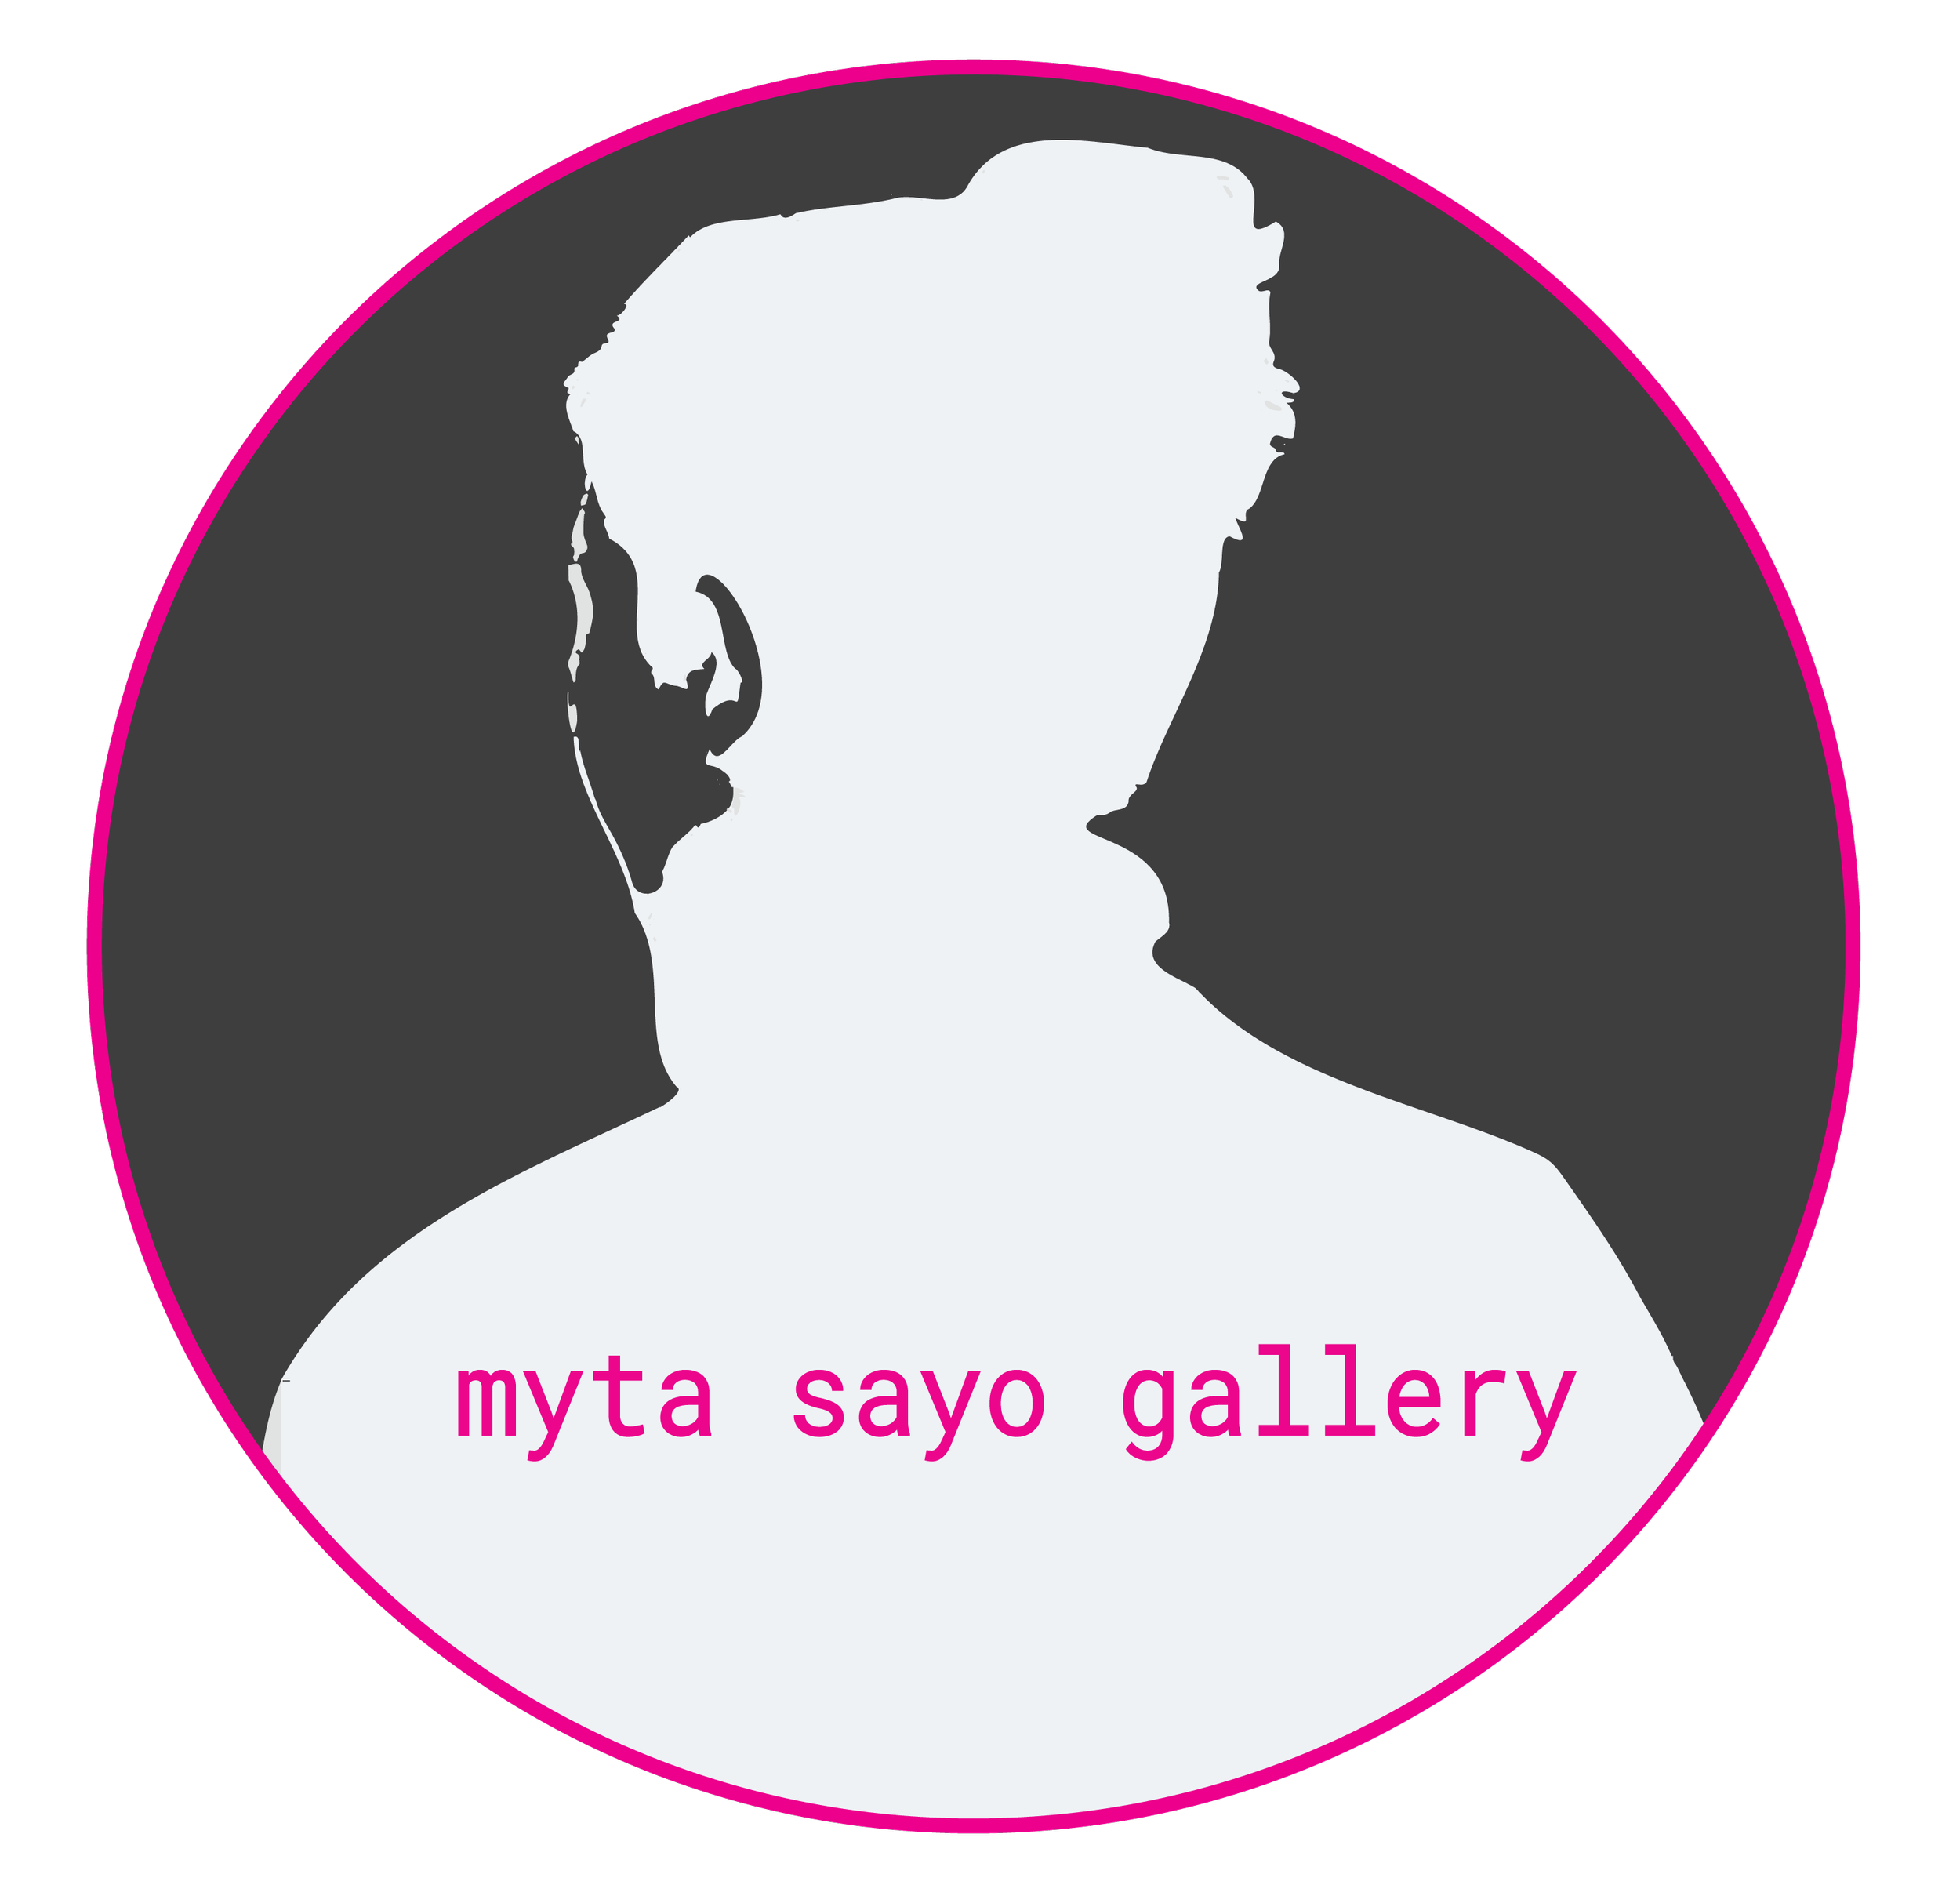 myta sayo gallery